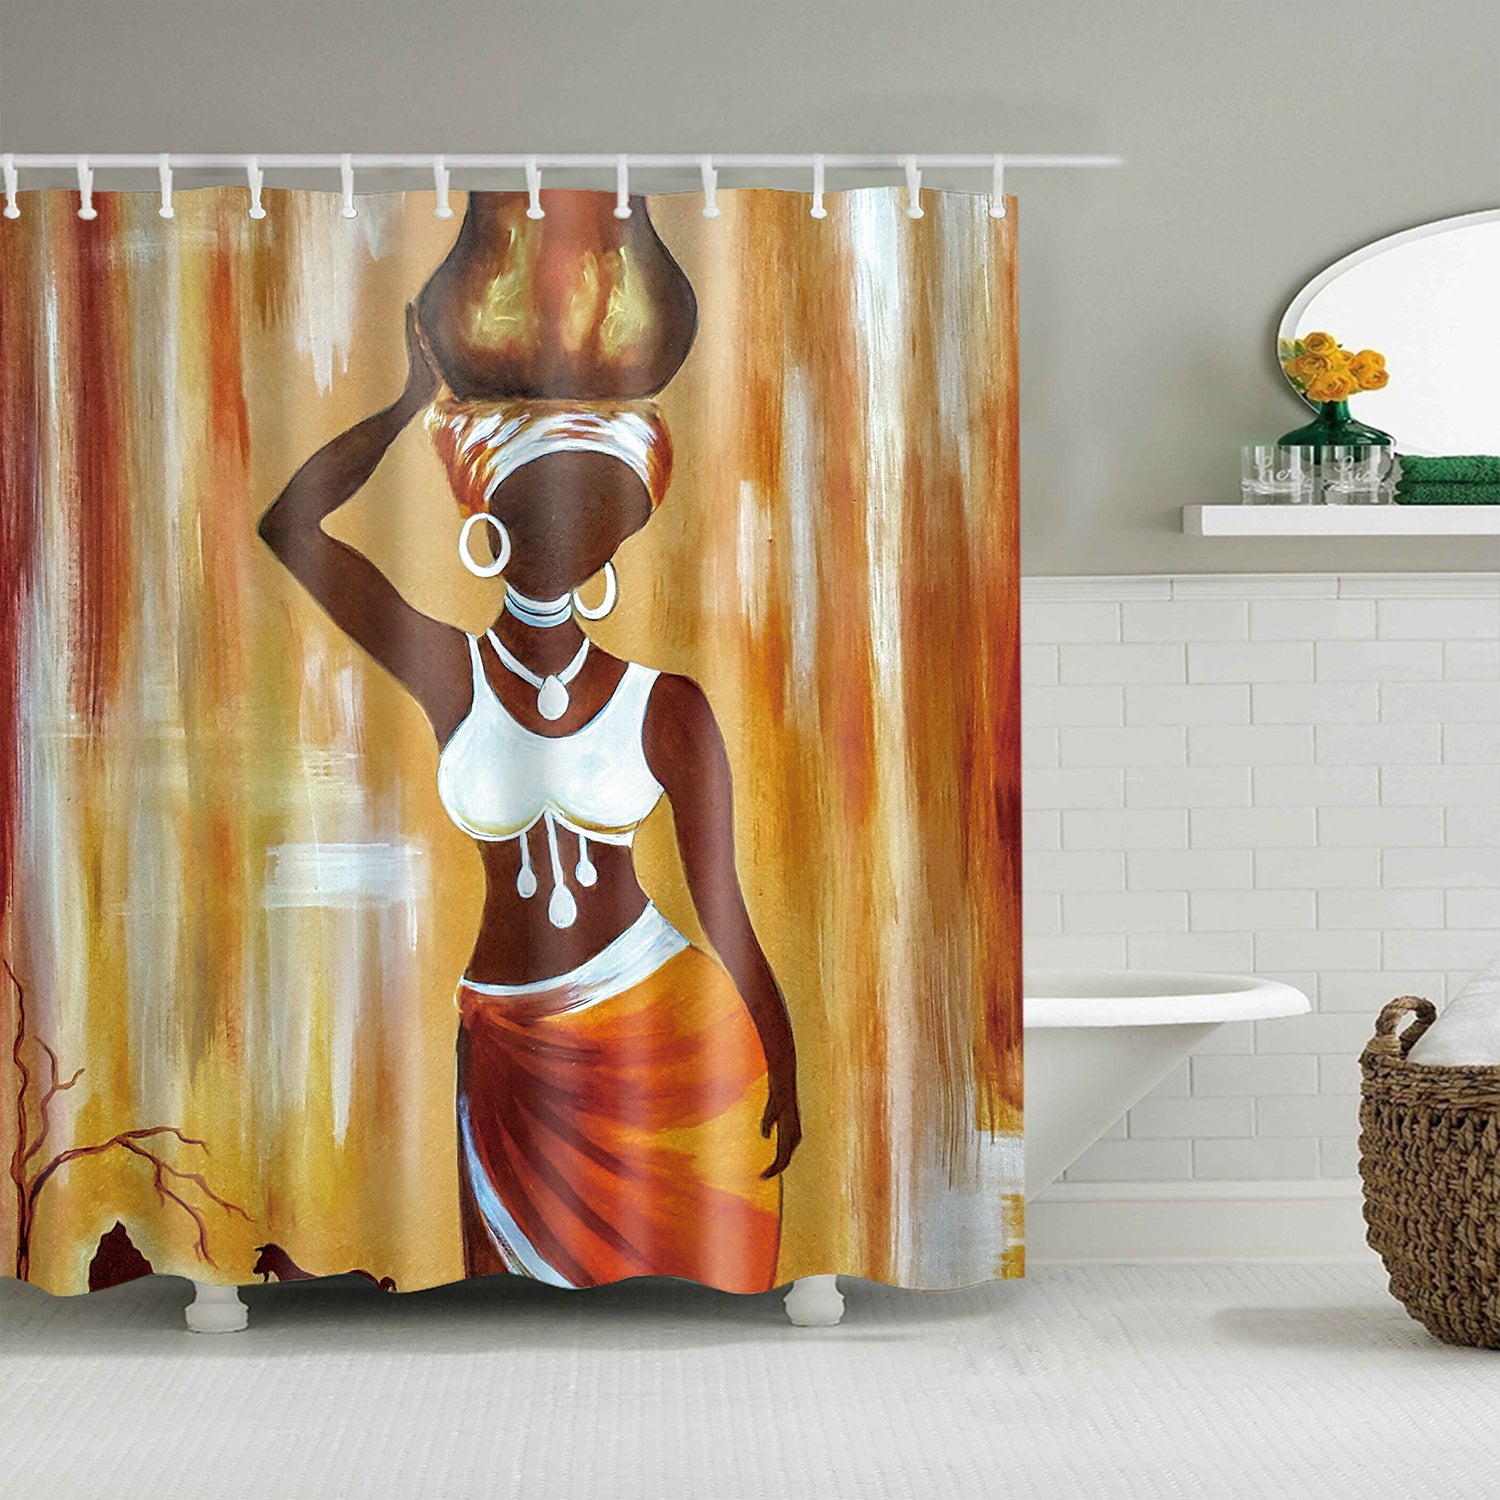 African Egyptian Shower Curtain Fascinating Mural Art Women Carrying Clay Pot Bathroom Decor Accessories Gojeek